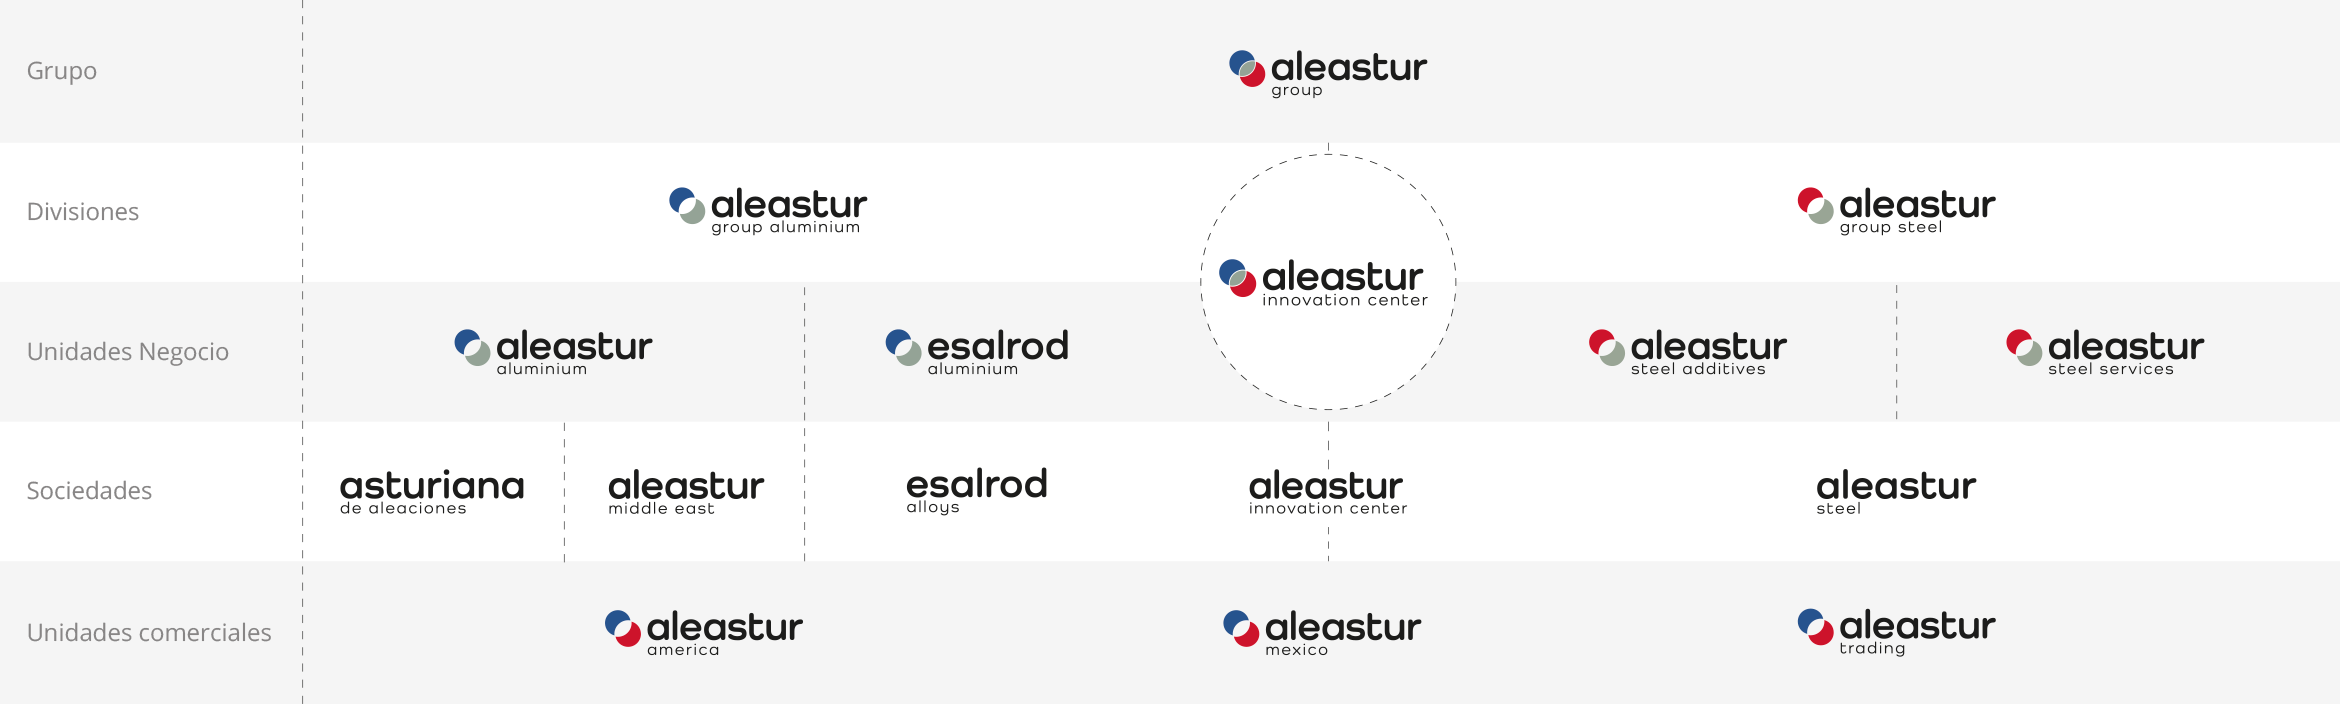 Logos aleastur group